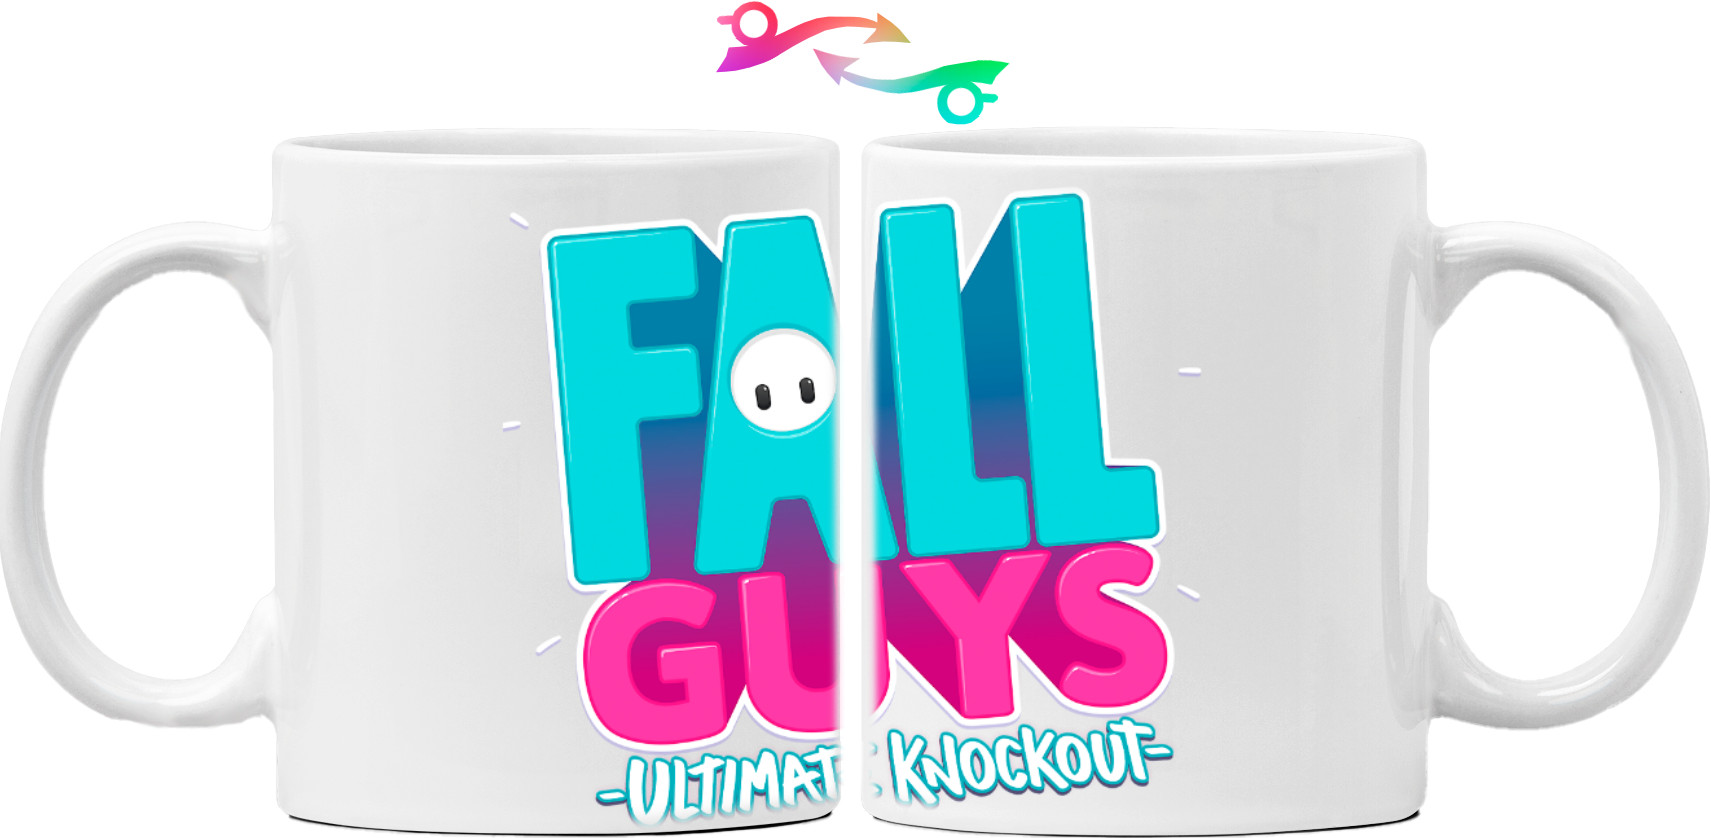 Fall Guys 2